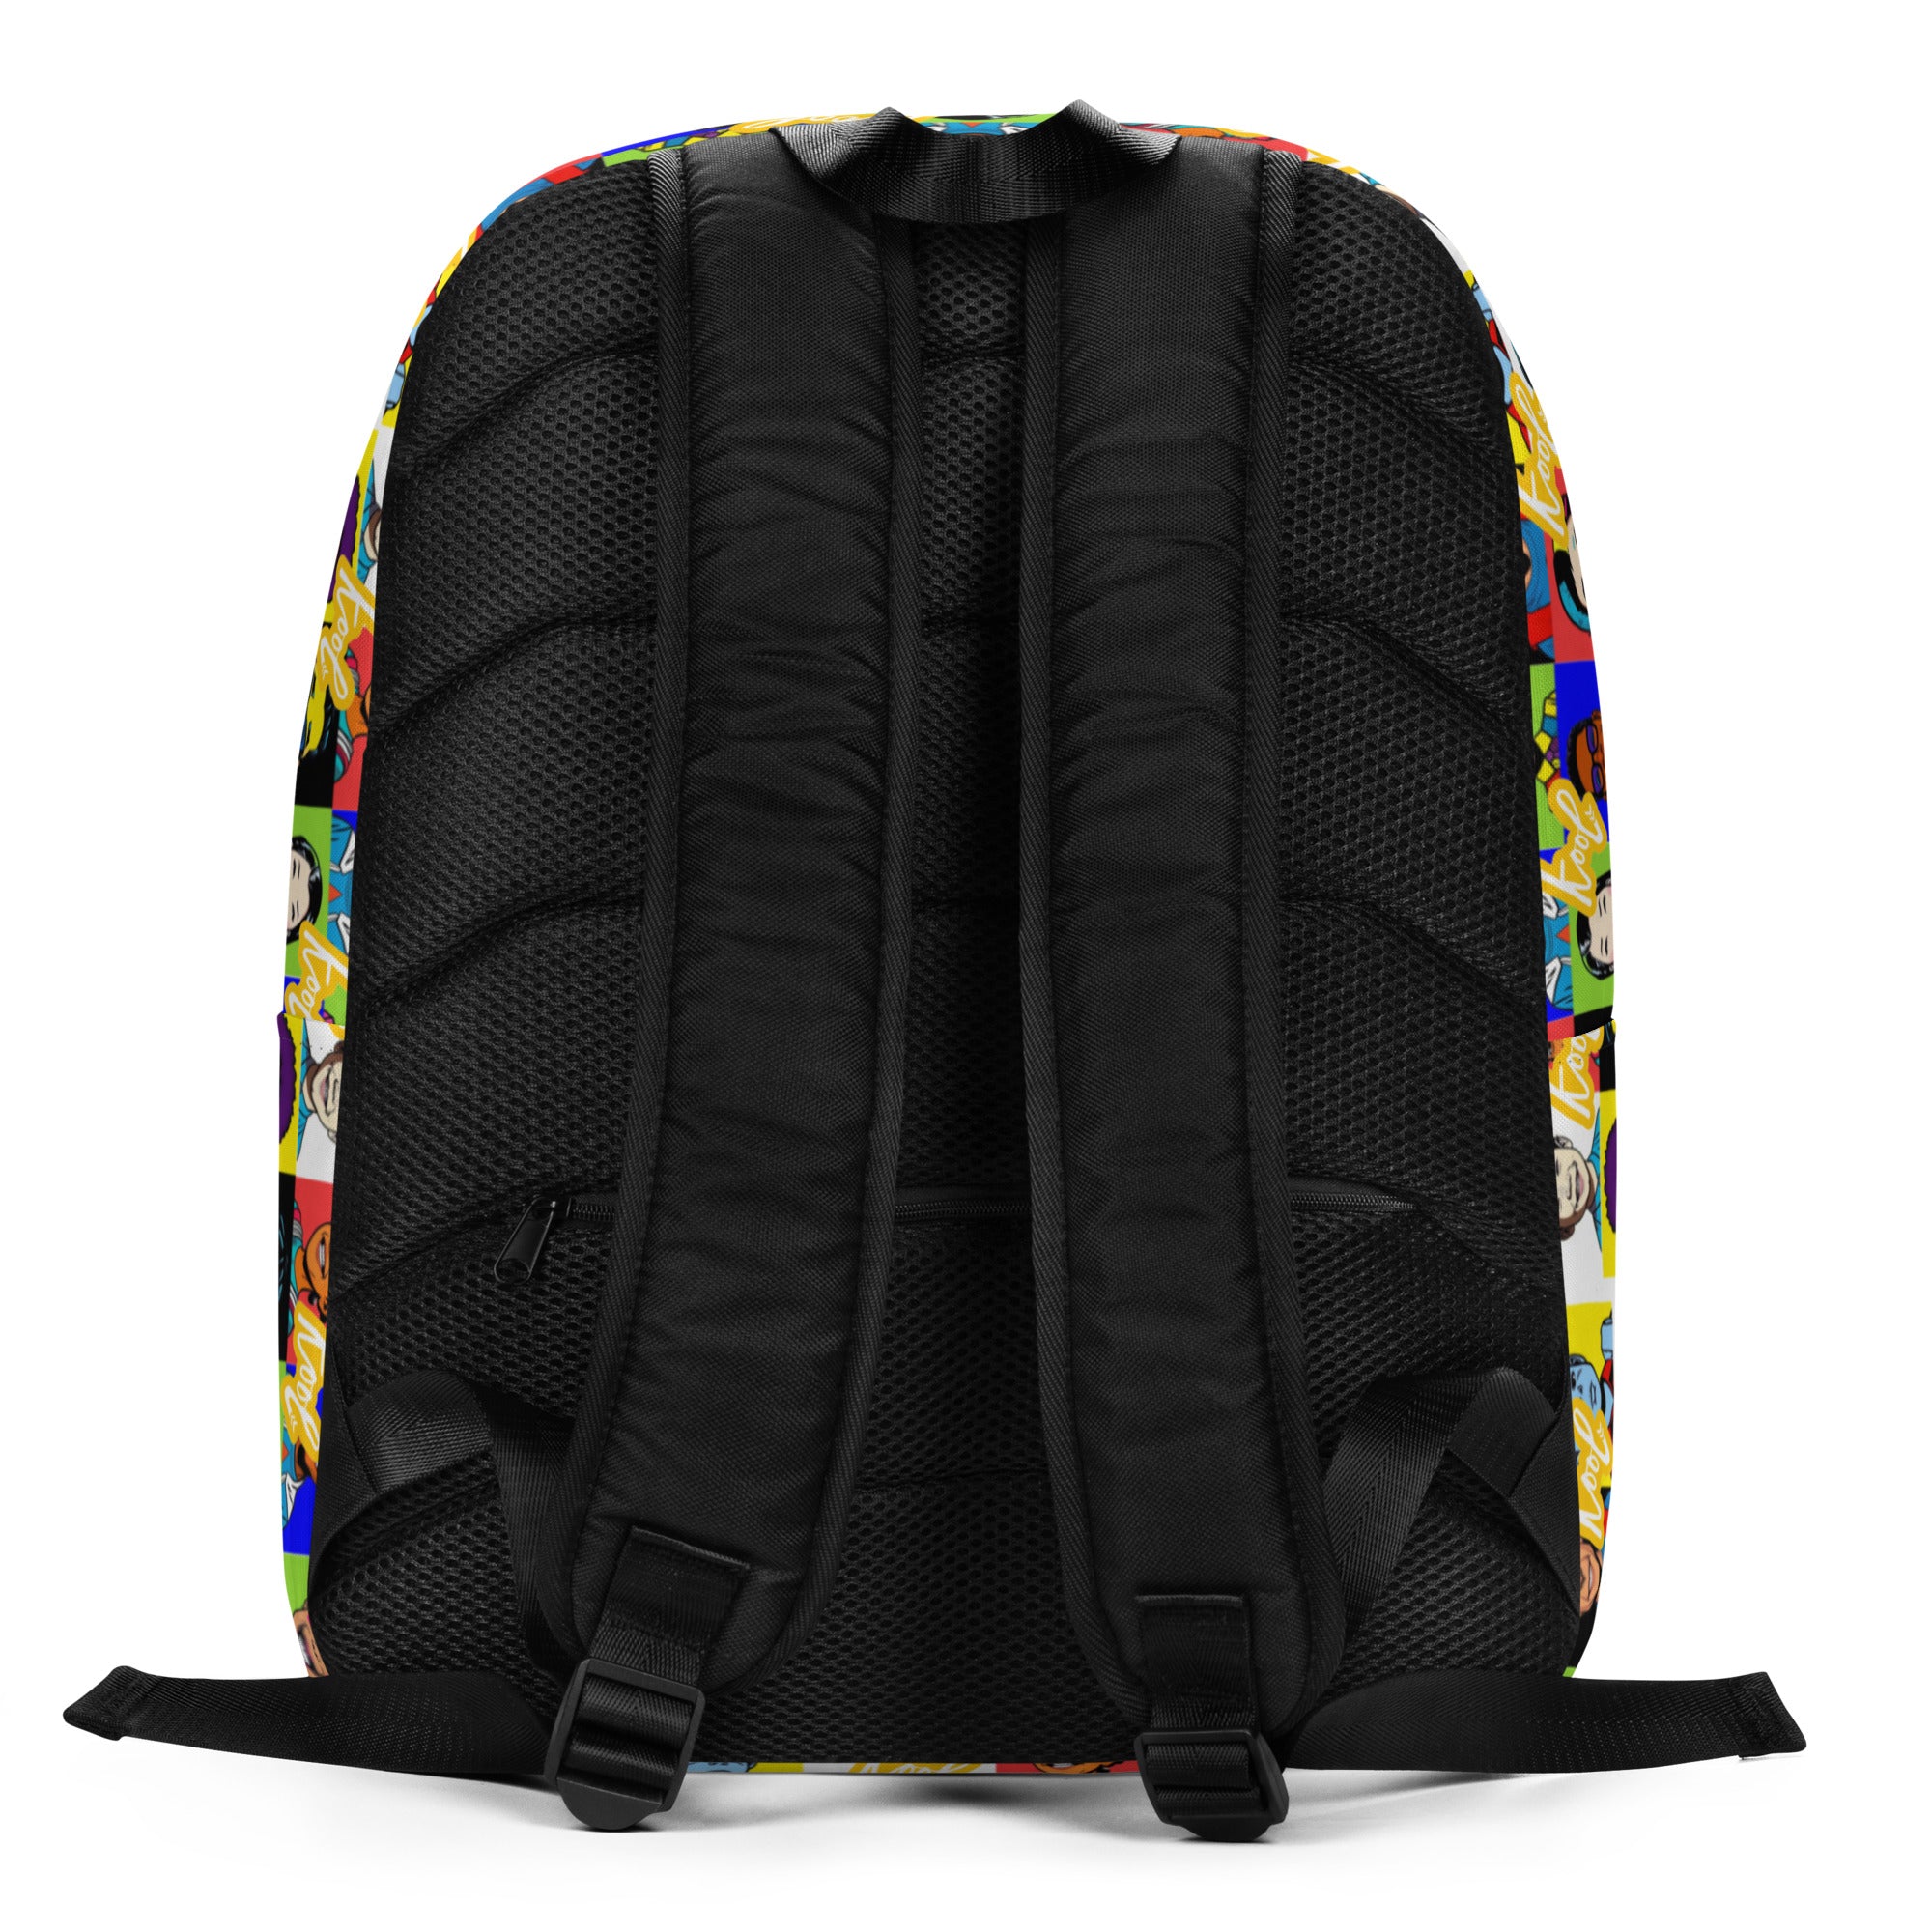 Generational Kool Backpack